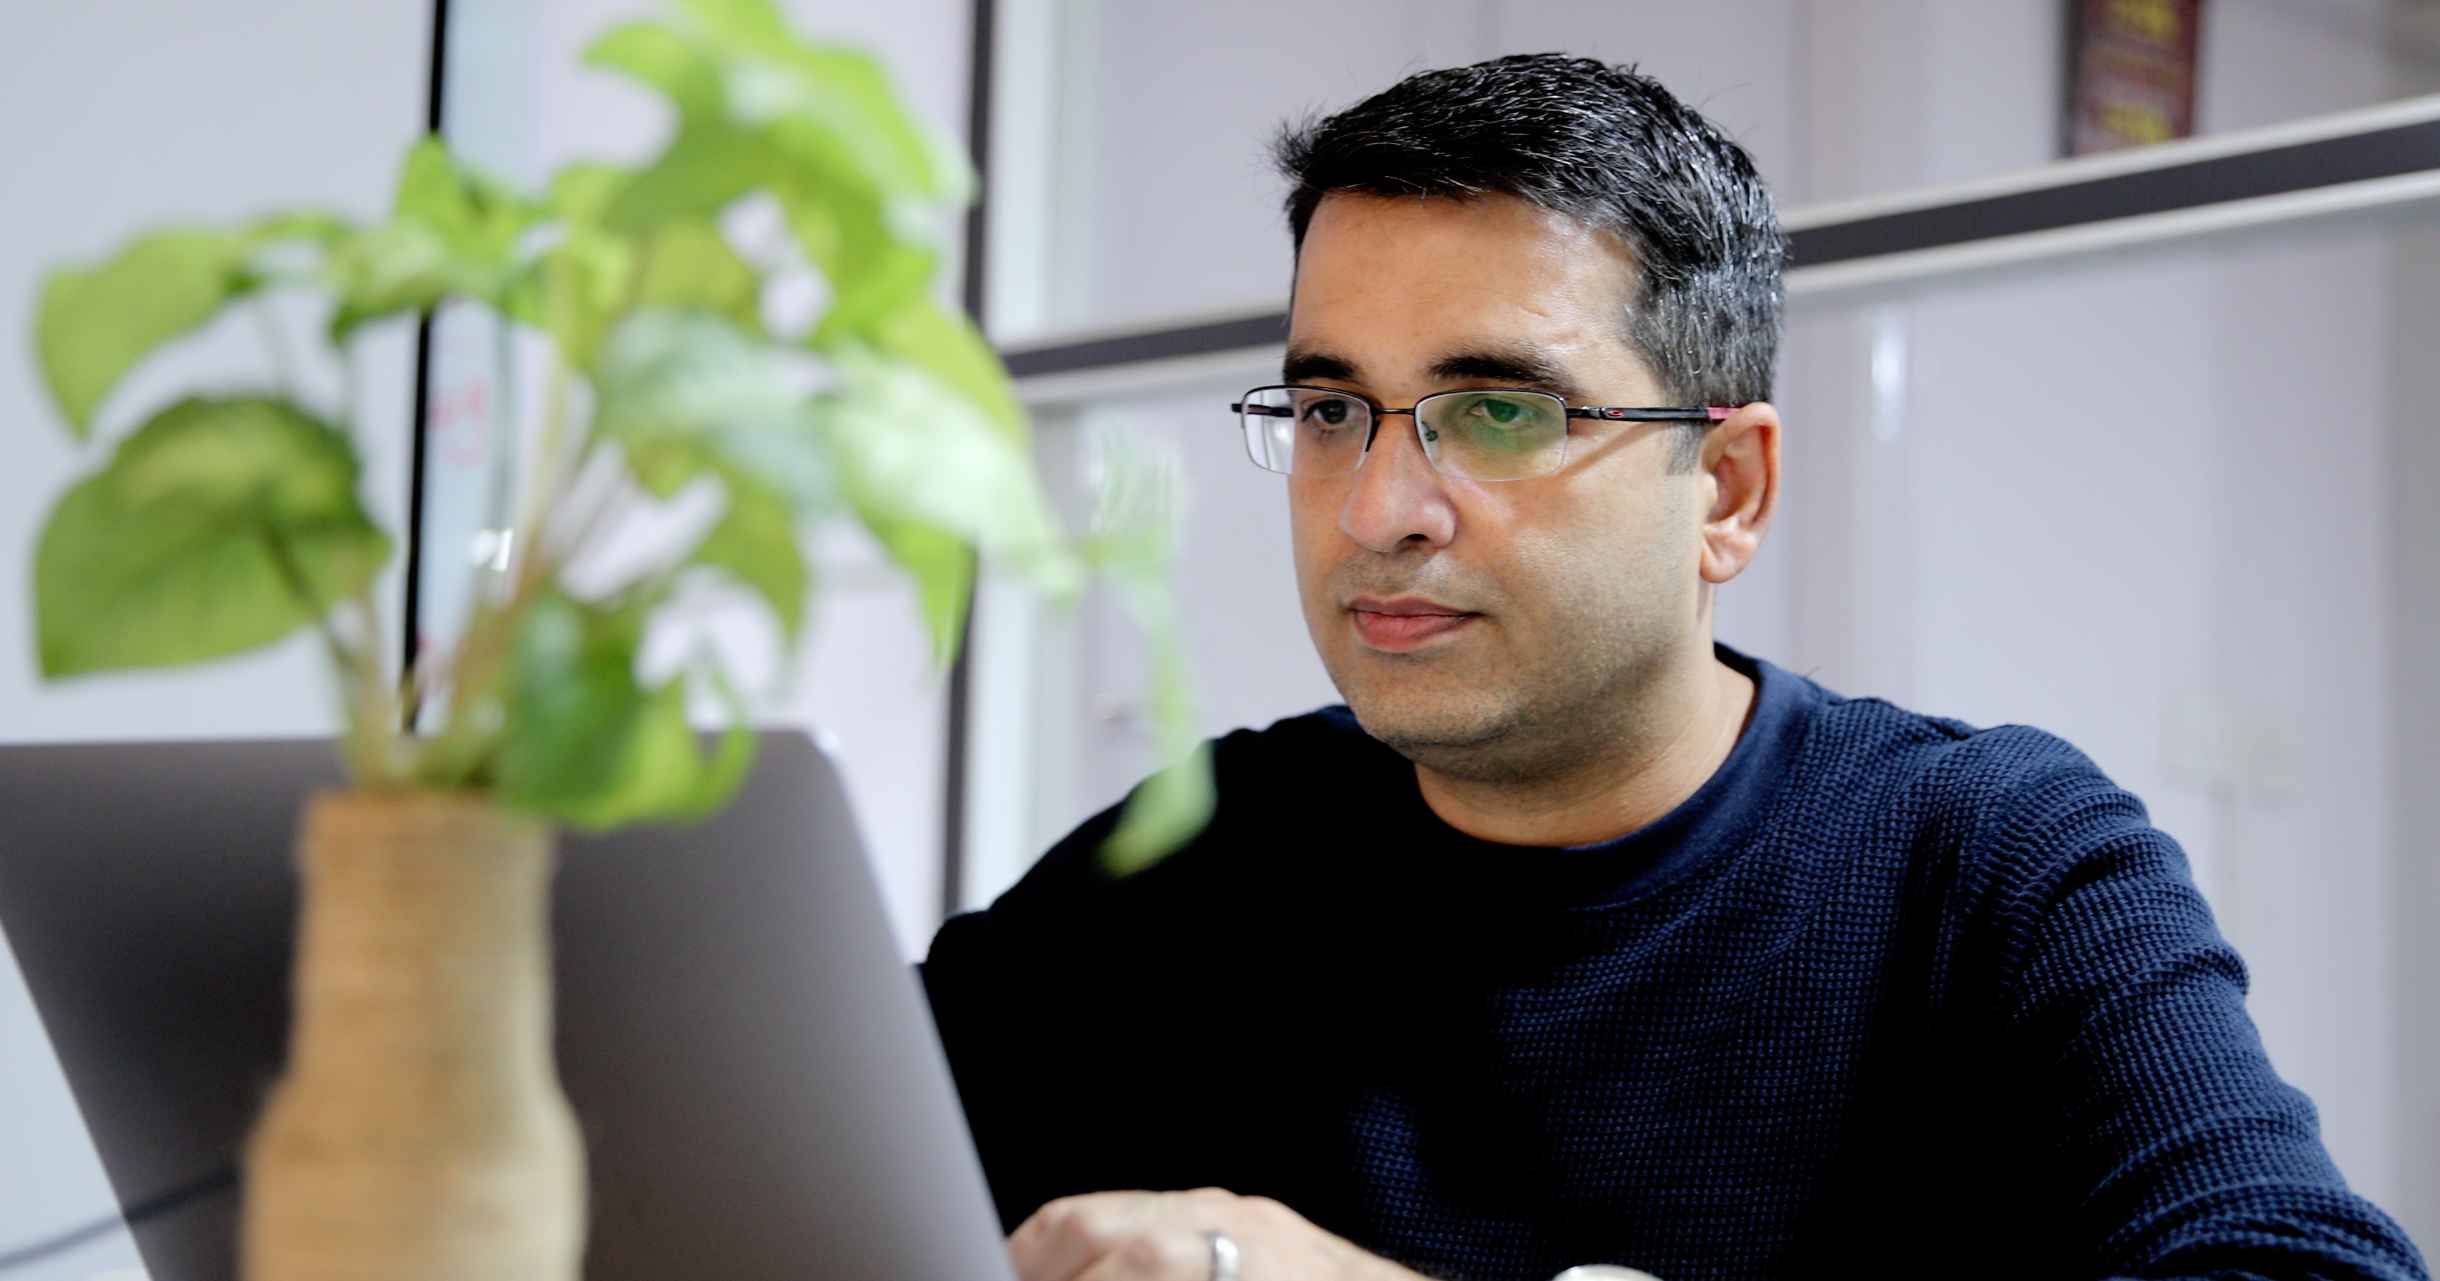 Gaurav Narang has built a venture CityGreens that helps farmers increase productivity through hydroponics